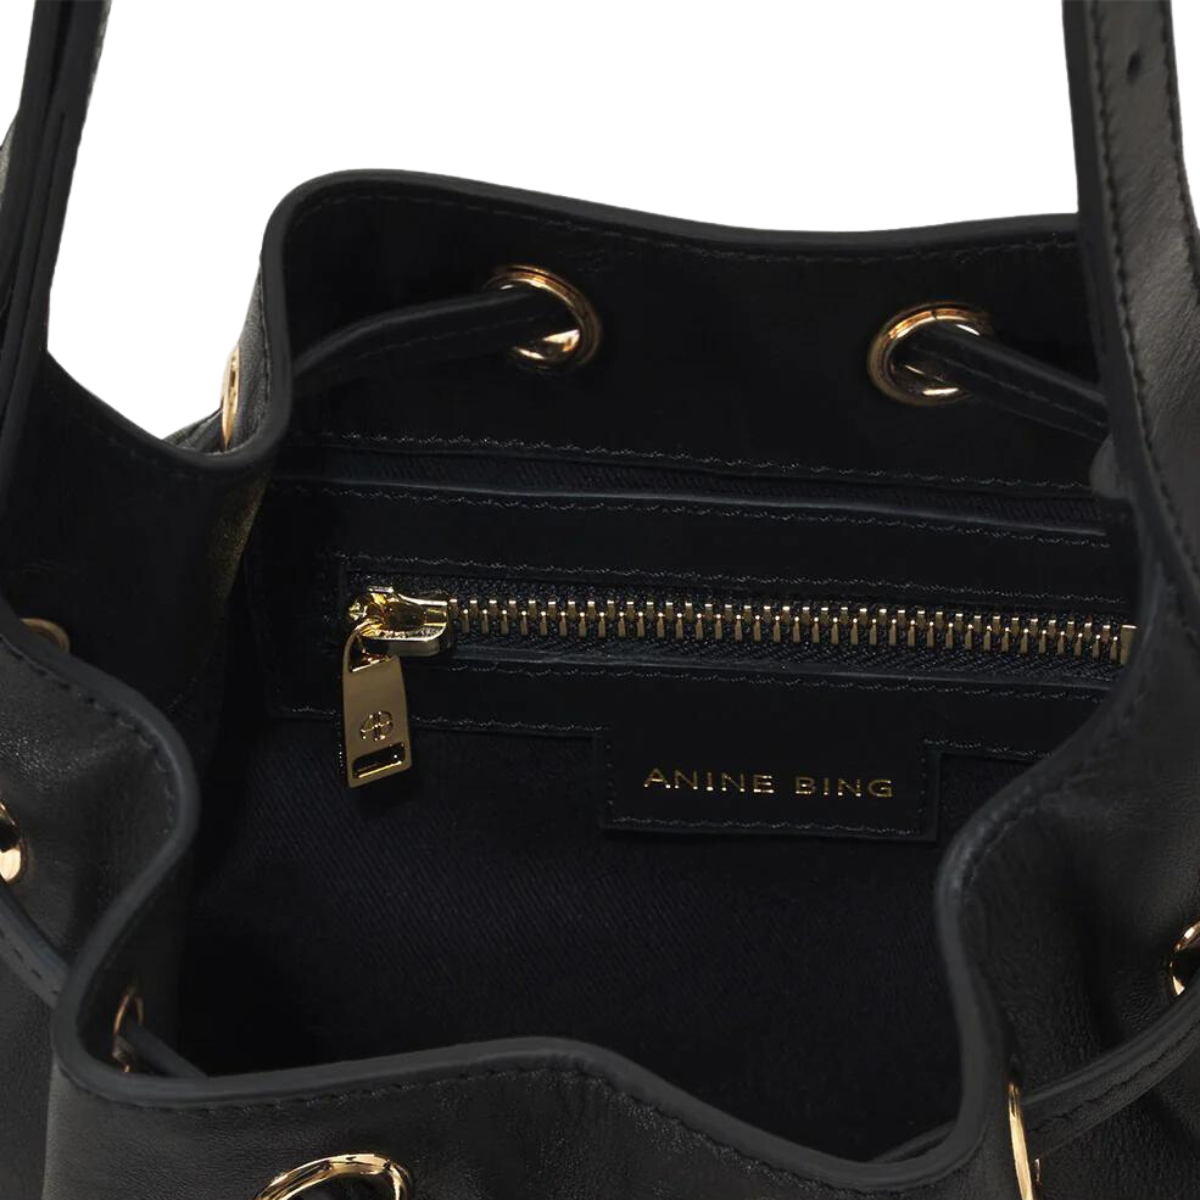 Anine Bing Alana Leather Bucket Bag in Black